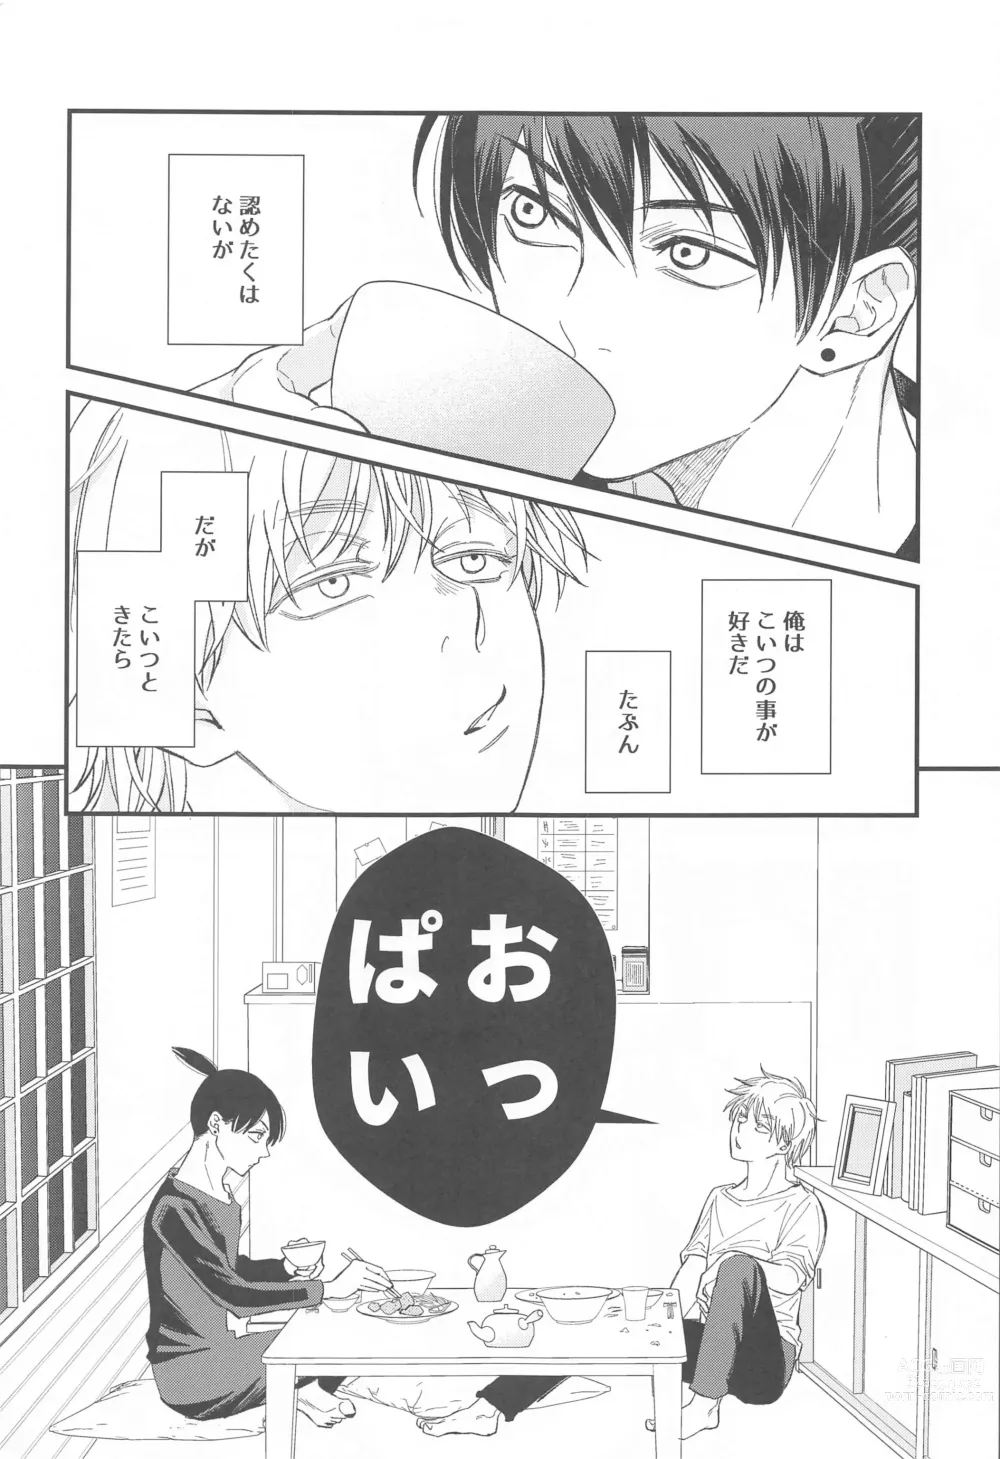 Page 4 of doujinshi FOOL